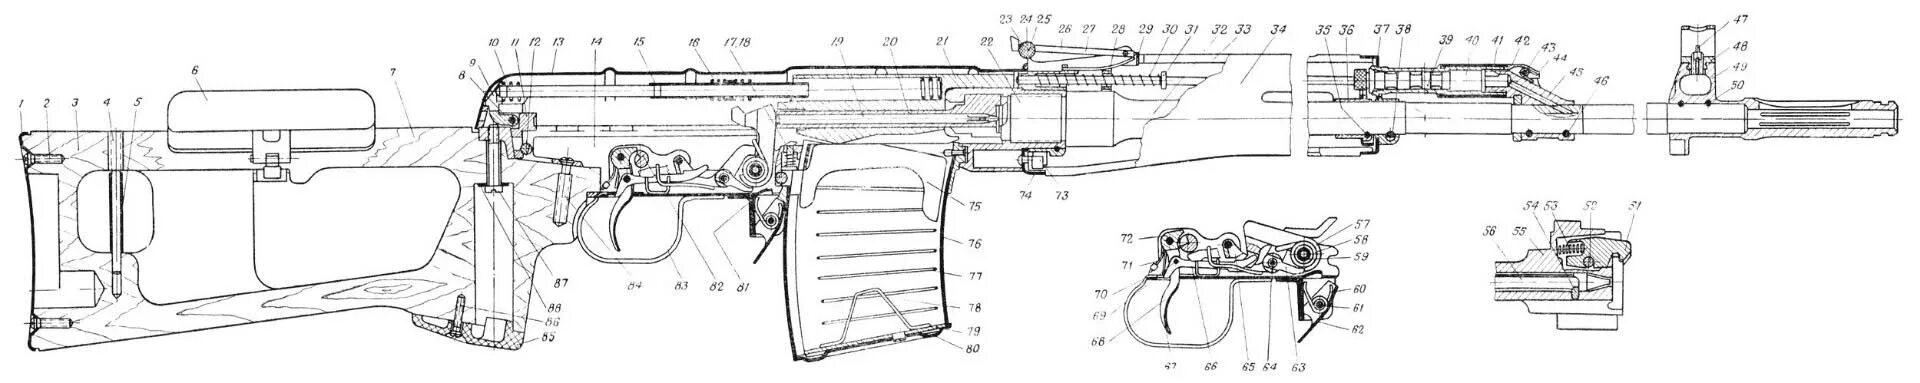 Диаметр ствола СВД чертеж. Снайперская винтовка Драгунова чертеж. Снайперская винтовка СВД чертеж. СВД винтовка чертеж.